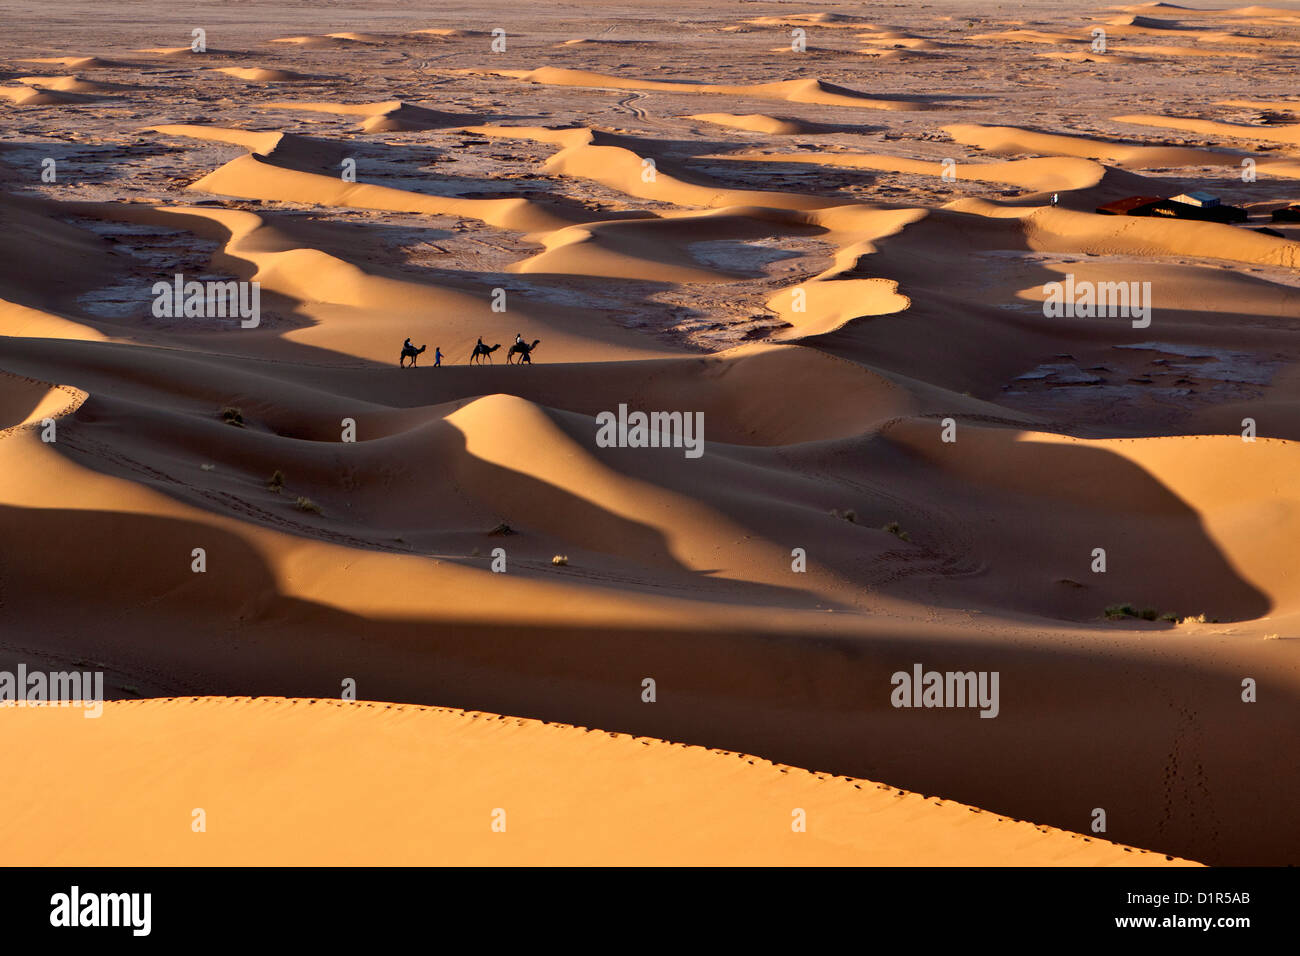 Morocco, M'Hamid, Erg Chigaga sand dunes. Sahara desert. Camel-drivers, camel caravan and tourists arriving at tourist camp. Stock Photo